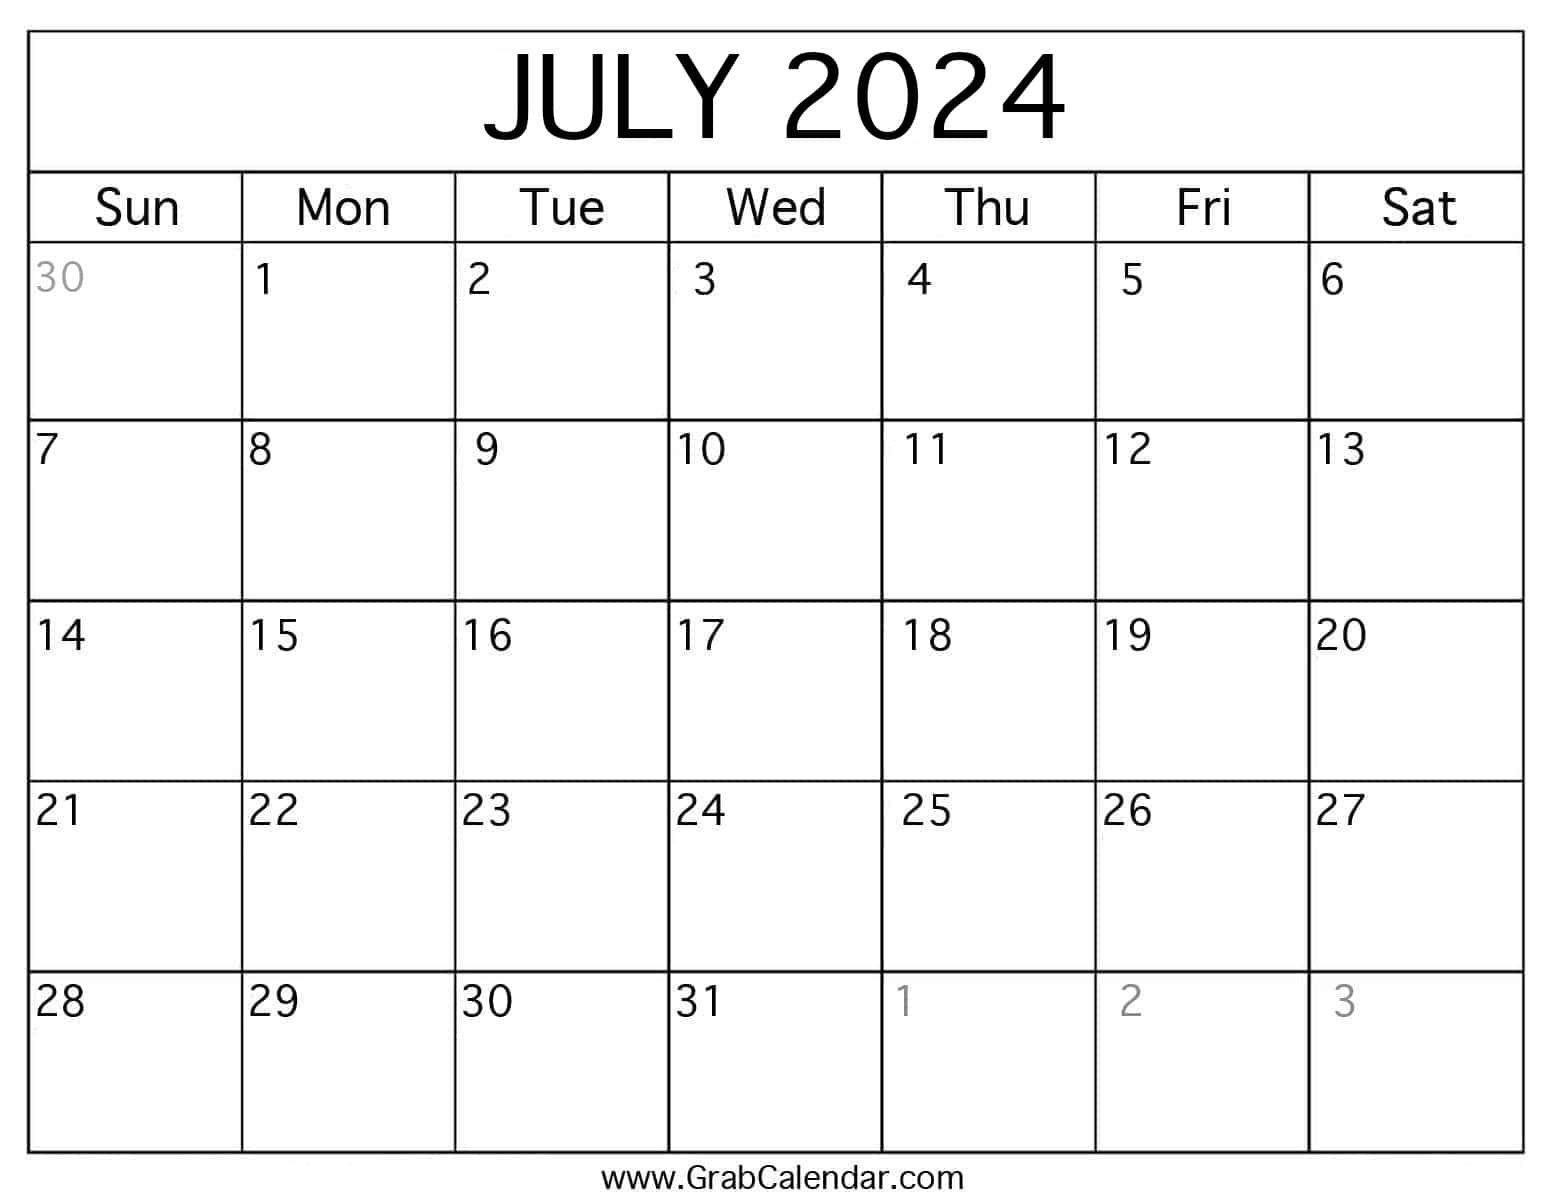 Printable July 2024 Calendar intended for Calendar July 2024 Printable Free